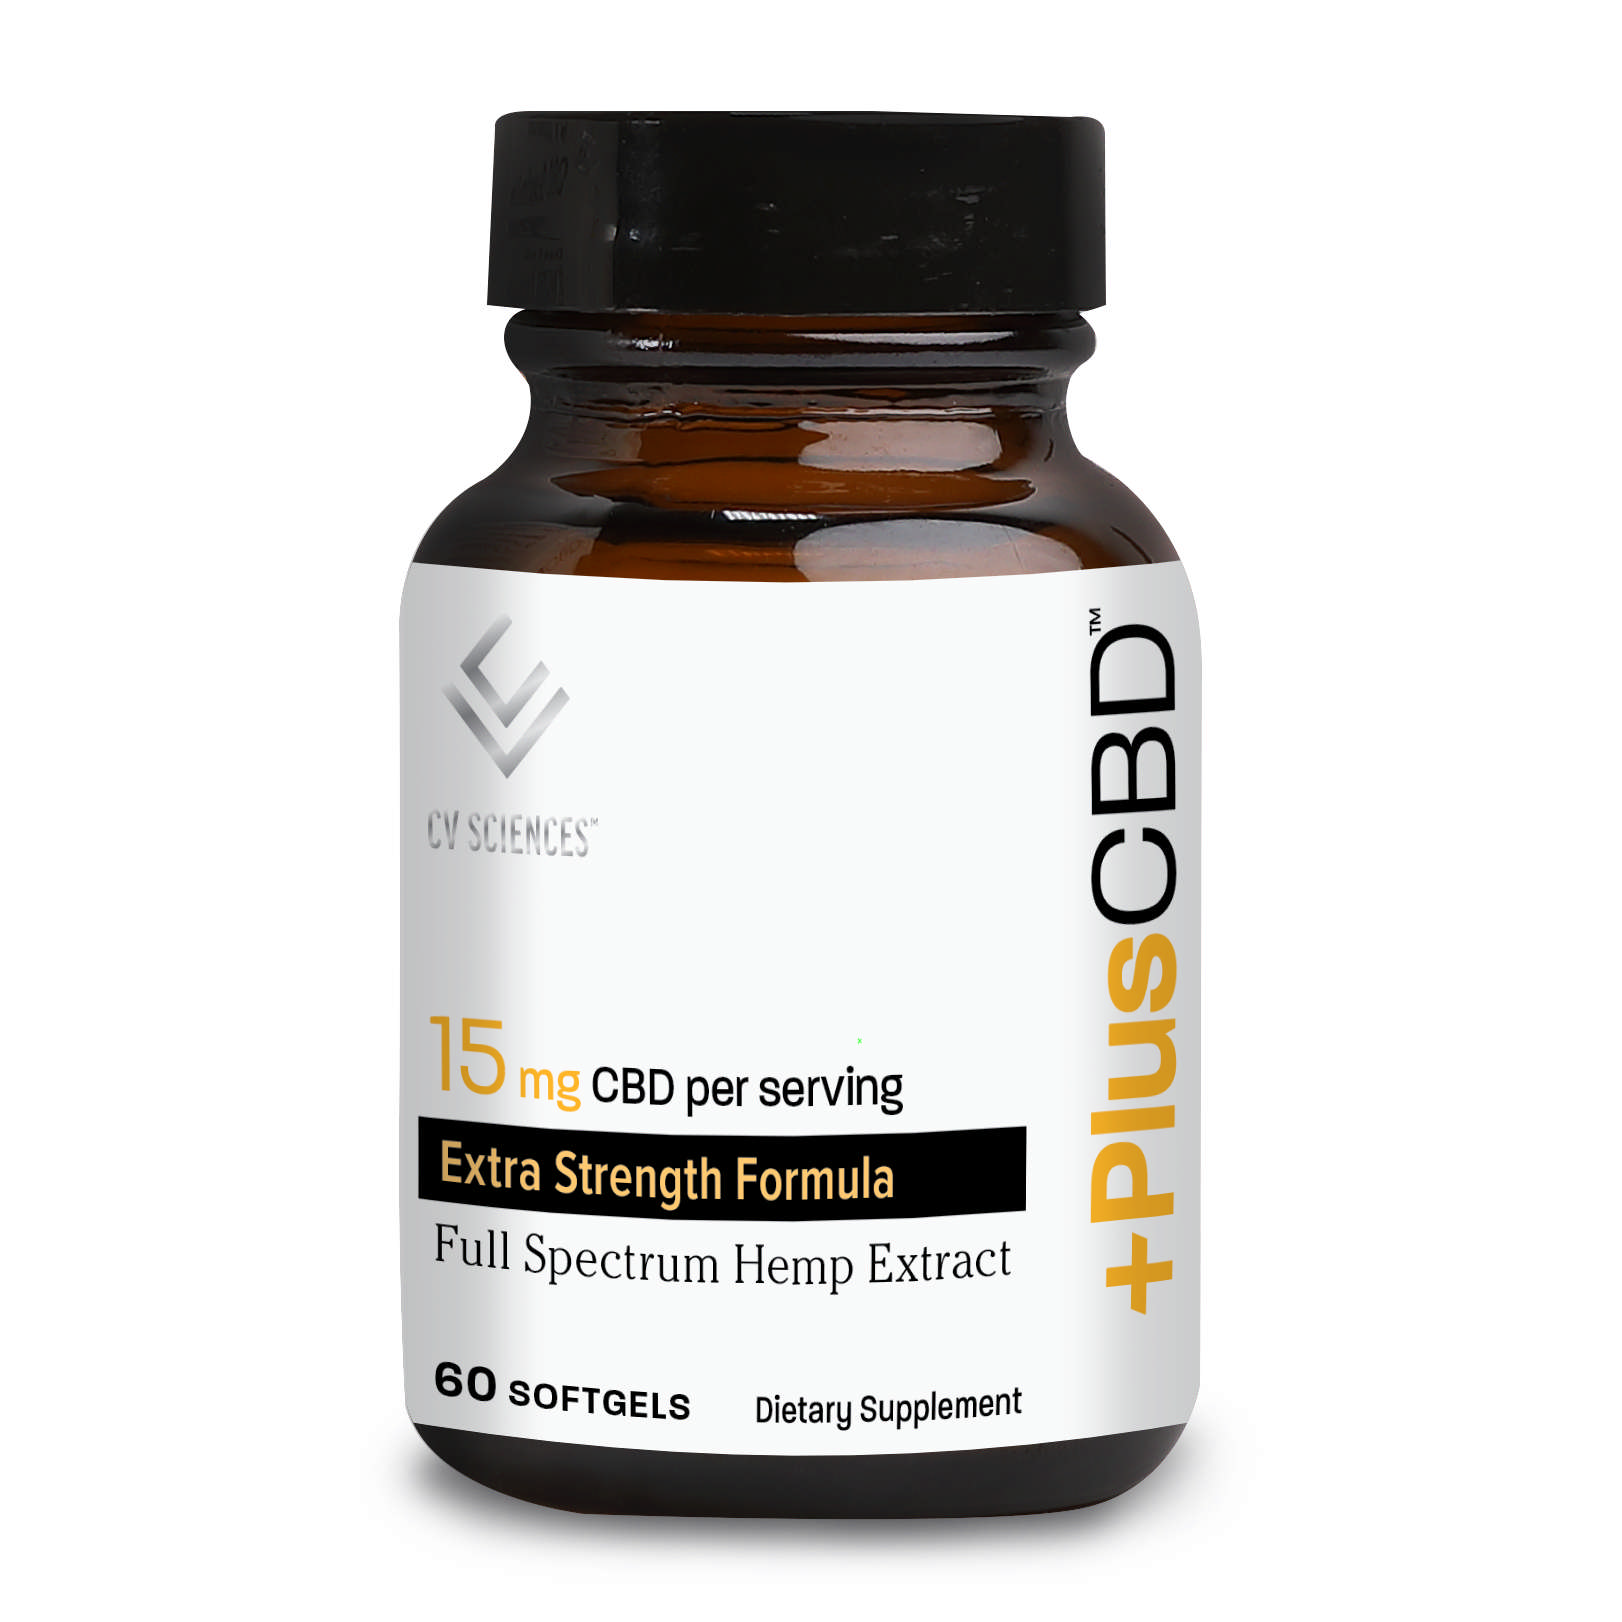 Cv Sciences - Cbd Oil+ 15 mg Cbd Gold softgel